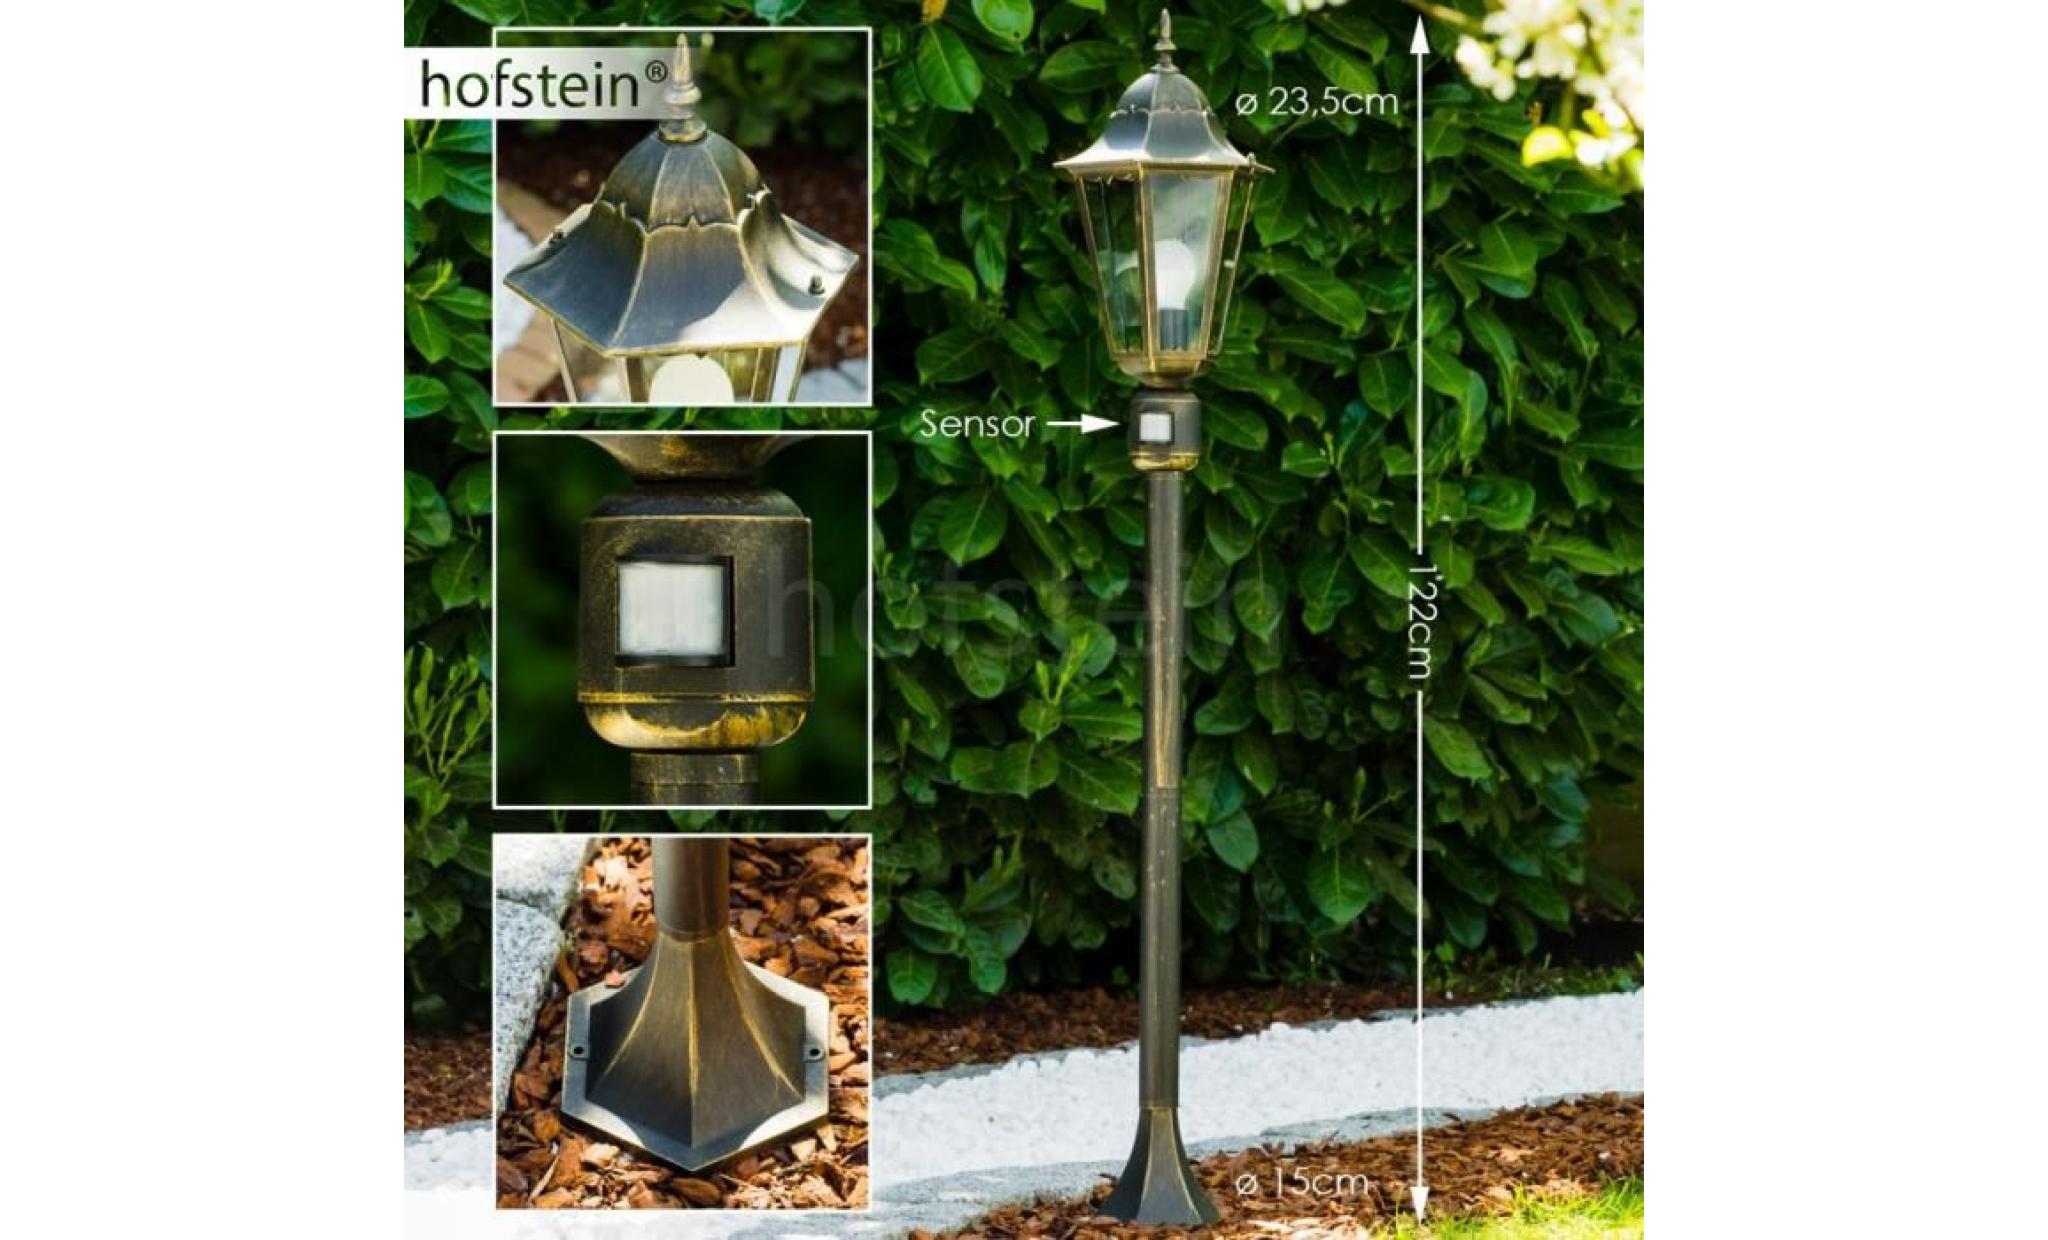 lampadaire d'extérieur hofstein bristol patine bronze